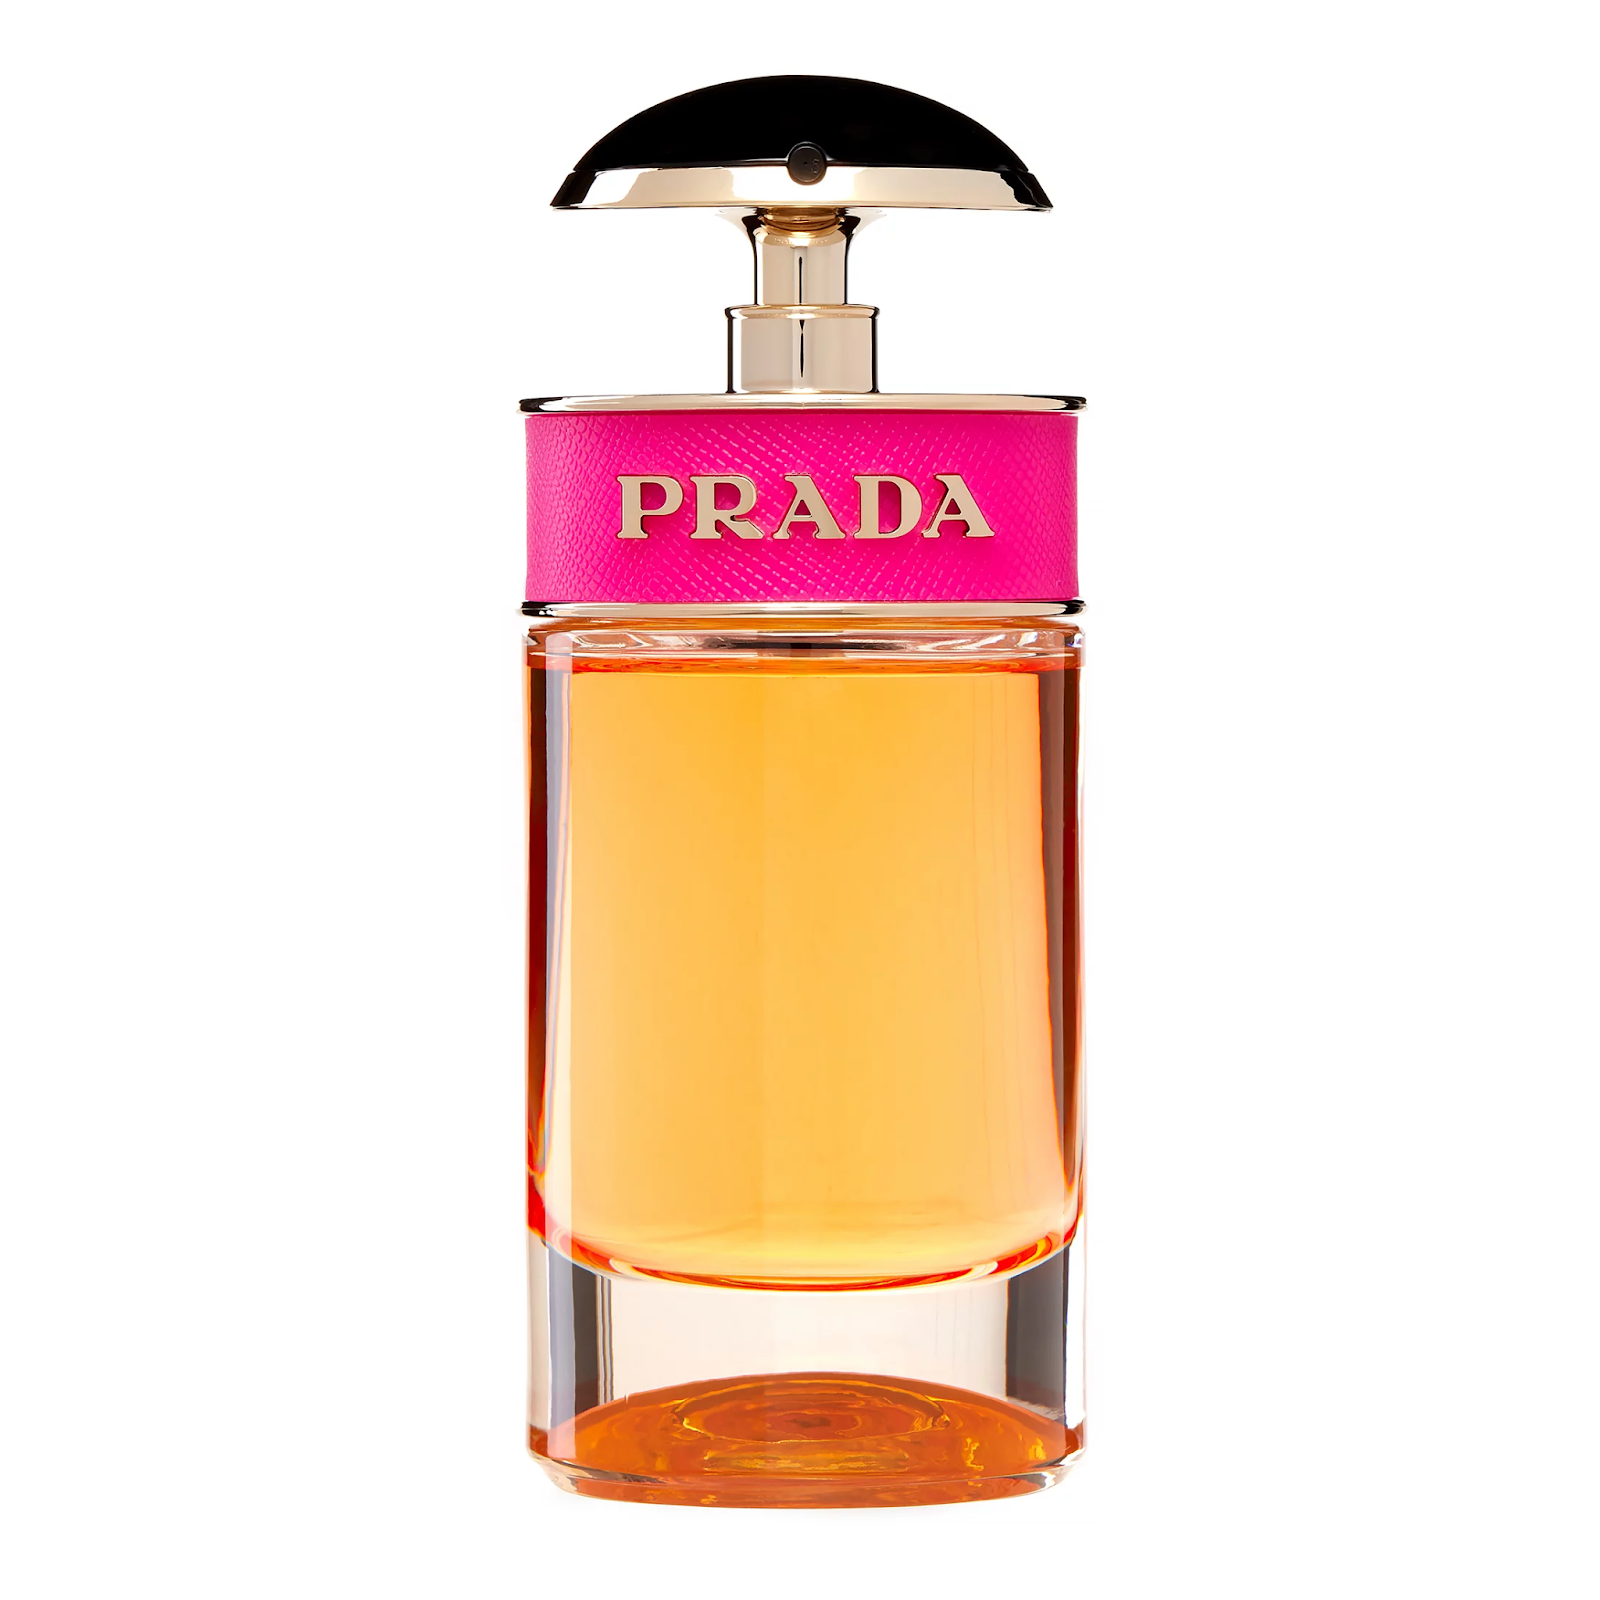 Arriba 94+ imagen perfumes that smell like prada candy